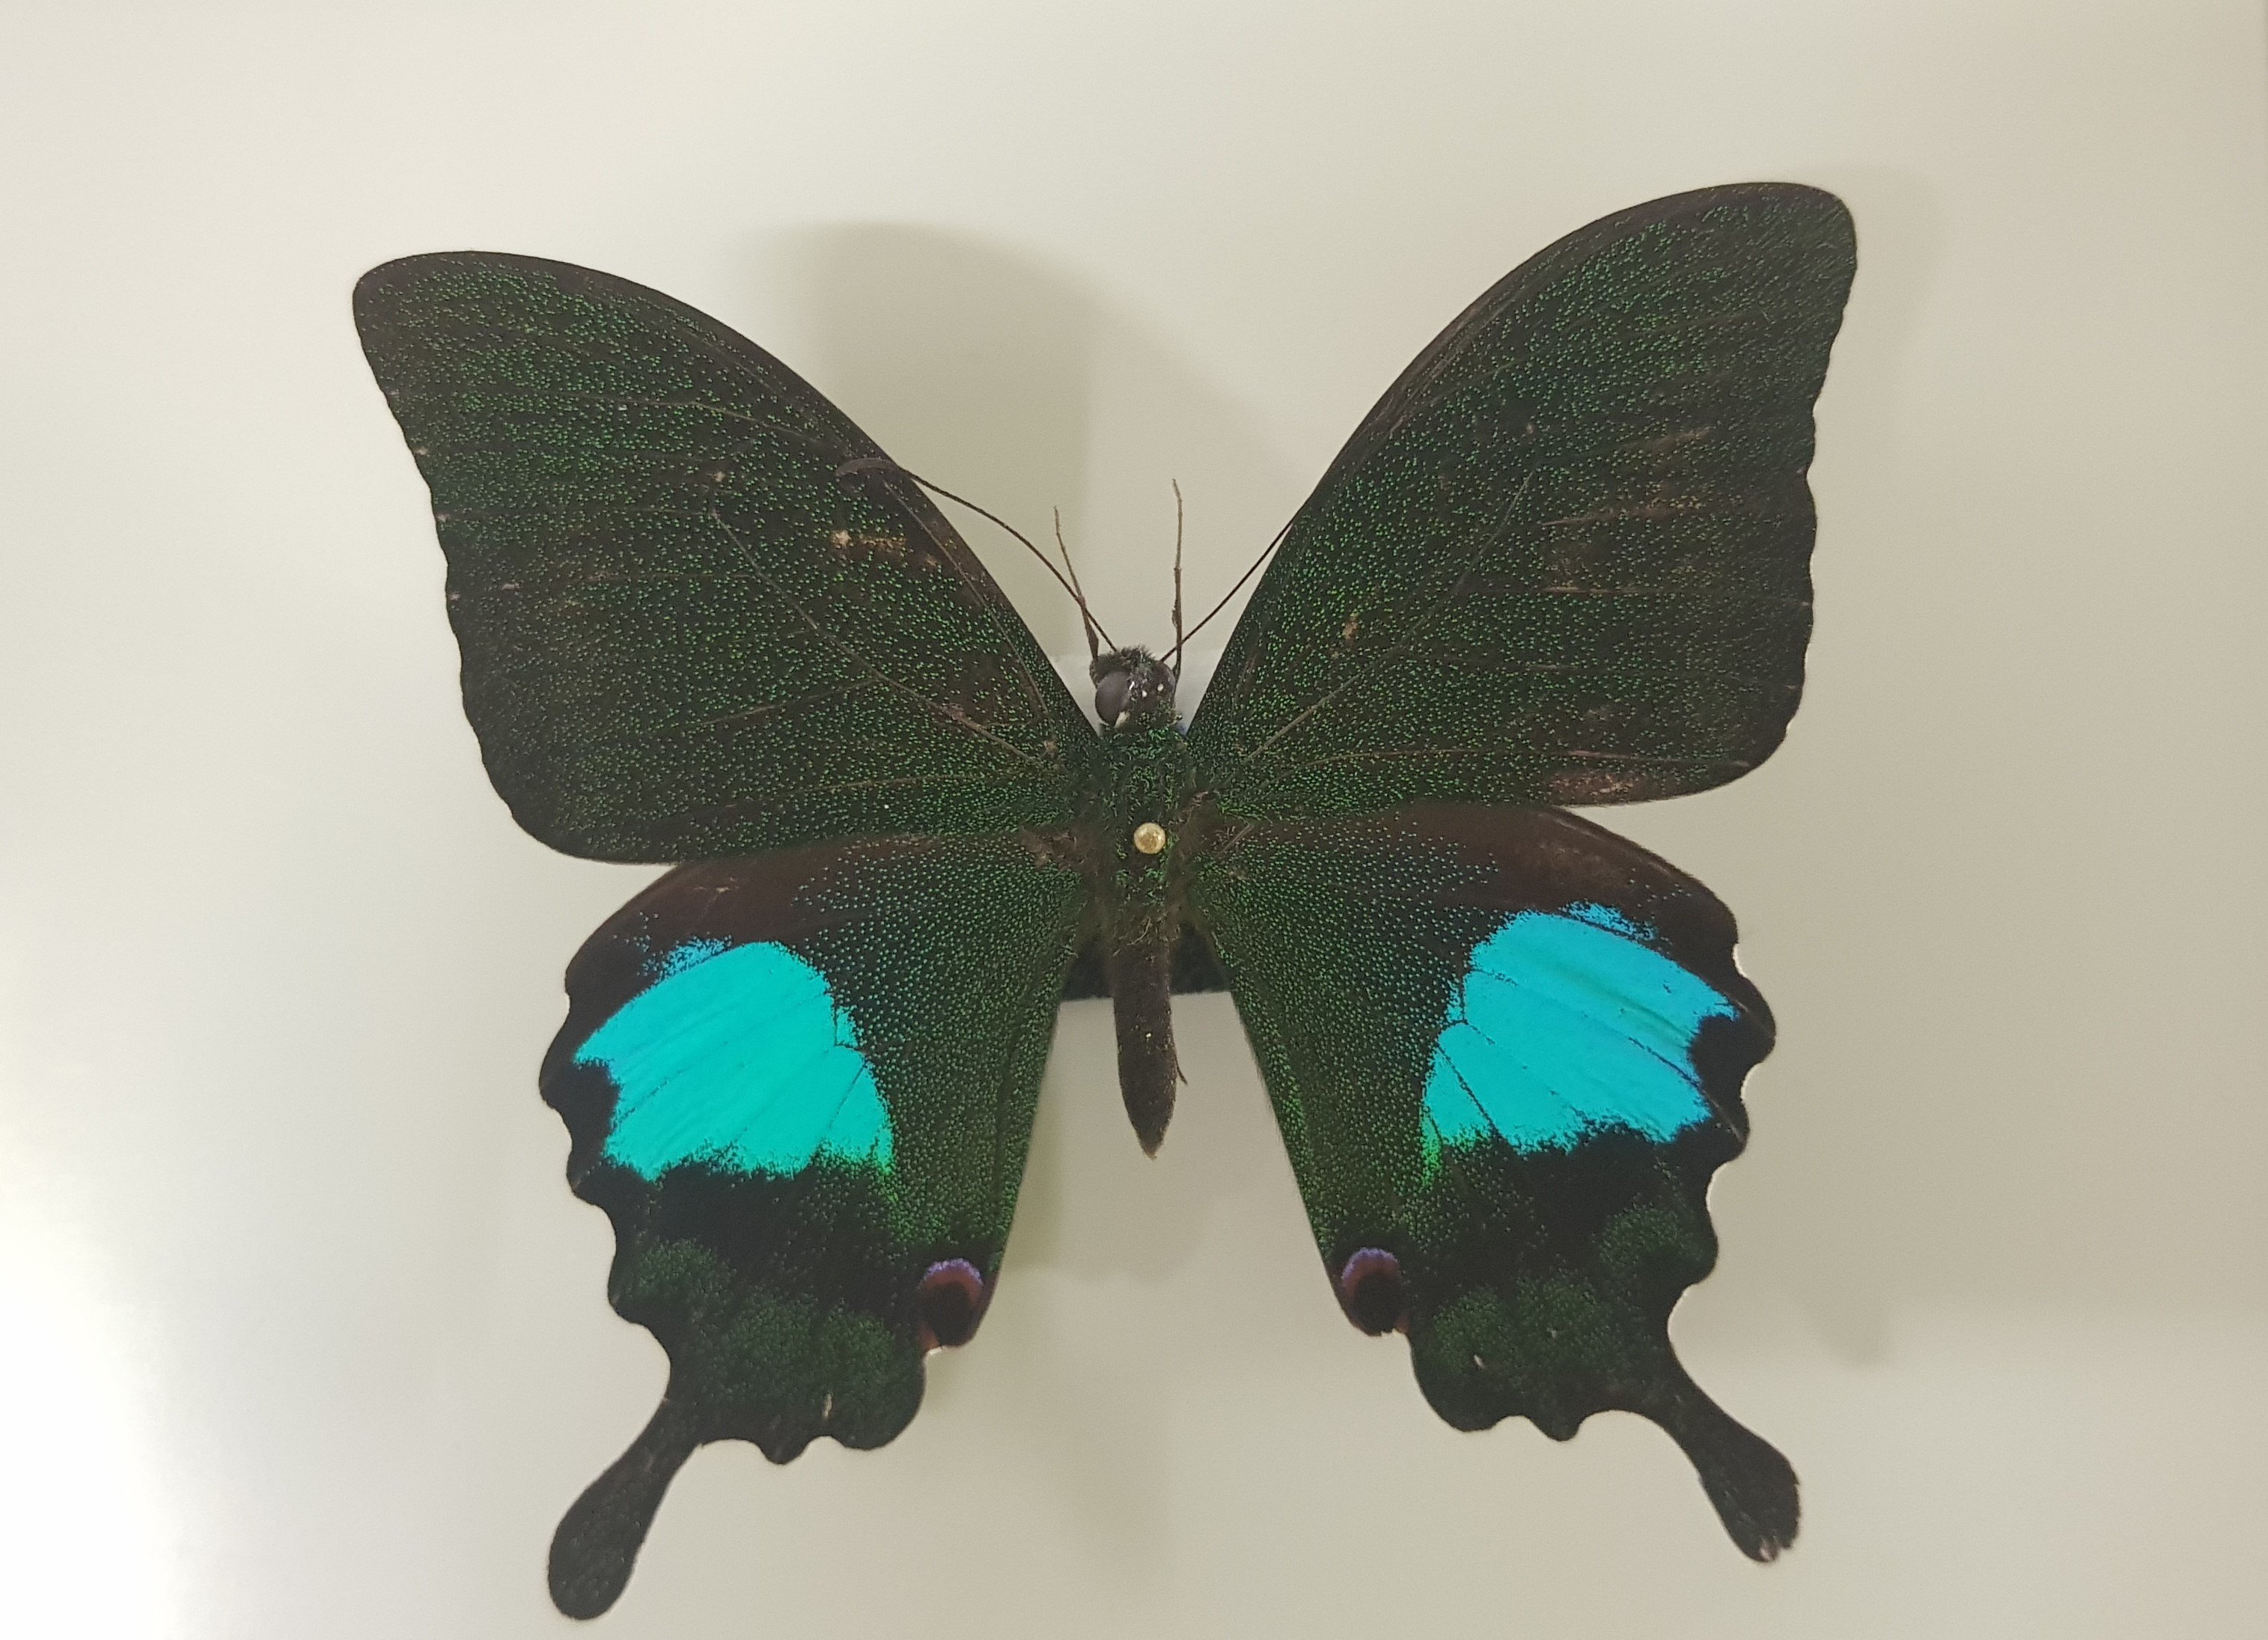 "Der Pariser Pfau", Paris Peacock, Papilio paris (Museum für Naturkunde Chemnitz CC BY-NC-ND)